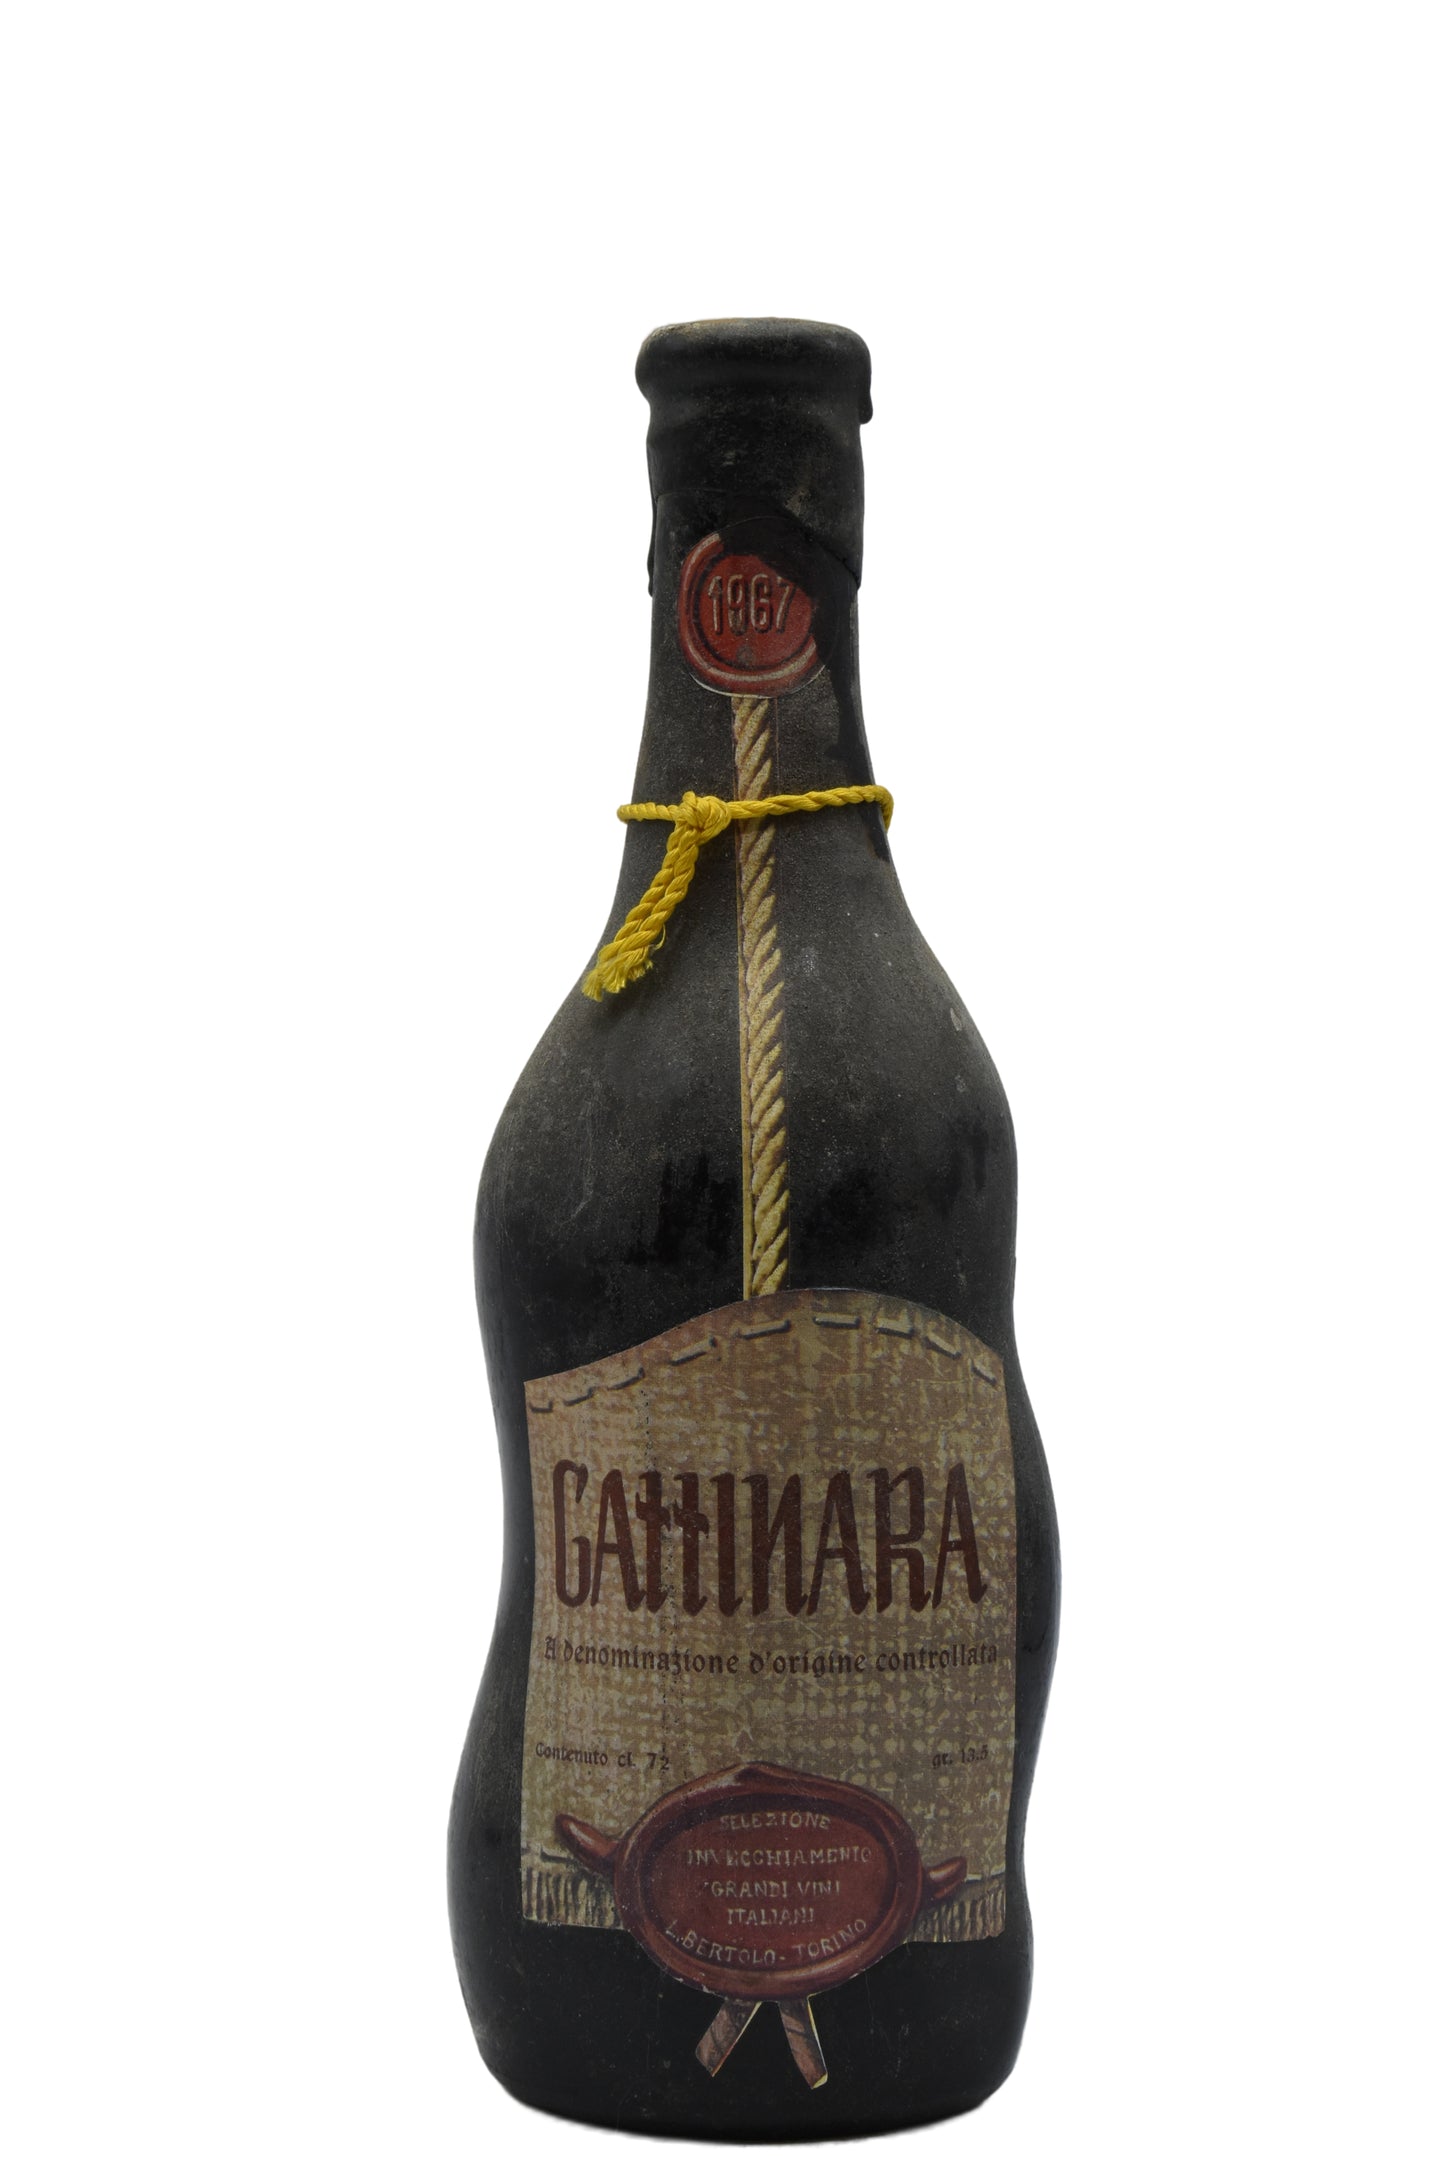 1967 Bertolo, Gattinara 750ml - Walker Wine Co.